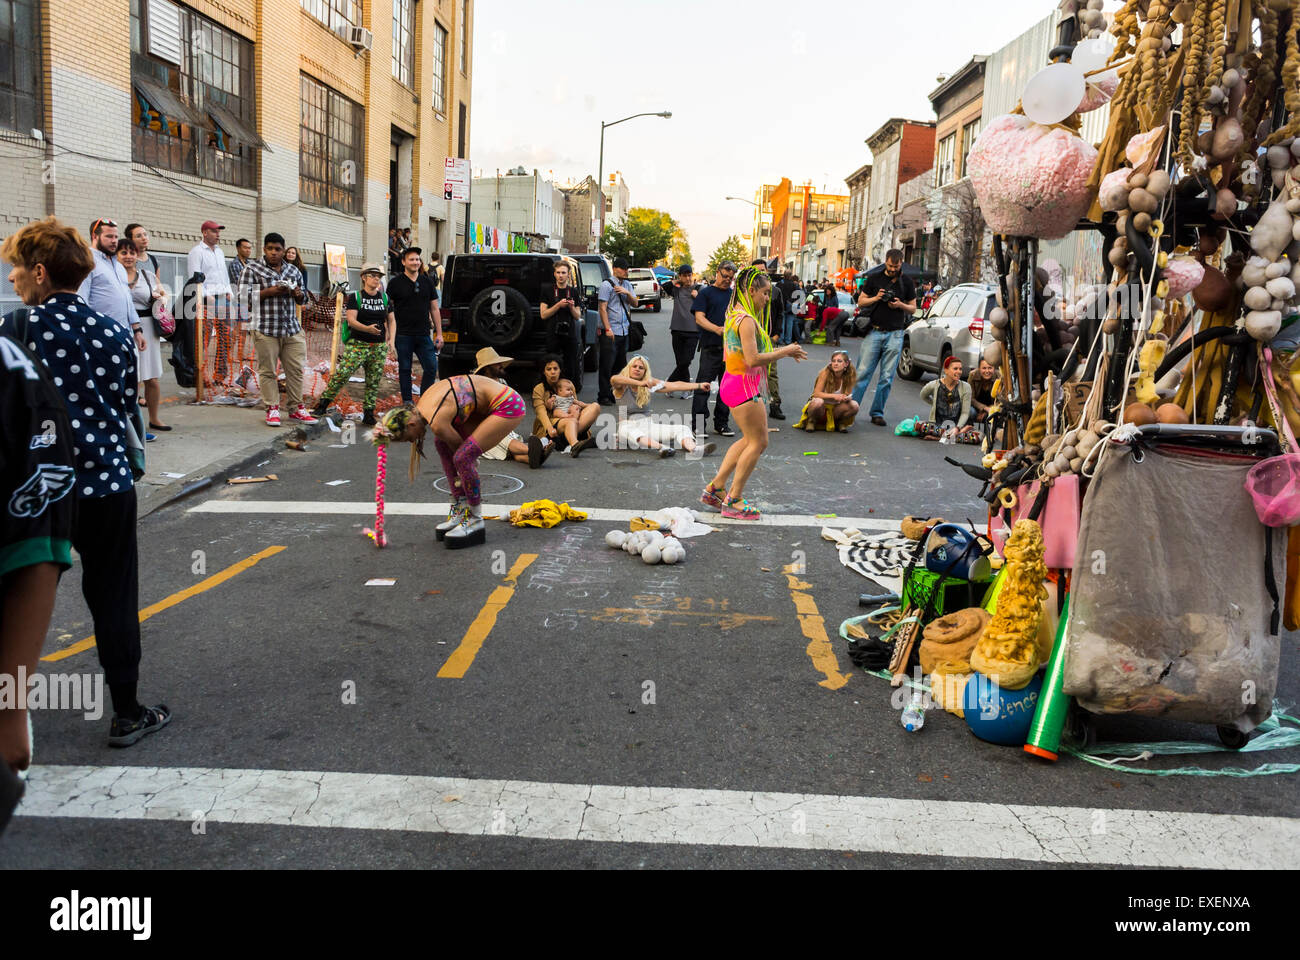 New York City, NY, USA, people gathered NY streets Visiting Bushwick Section of Brooklyn, Weekend Flea Market, Artist Street Performance, Local neighbourhoods, urban youths Stock Photo